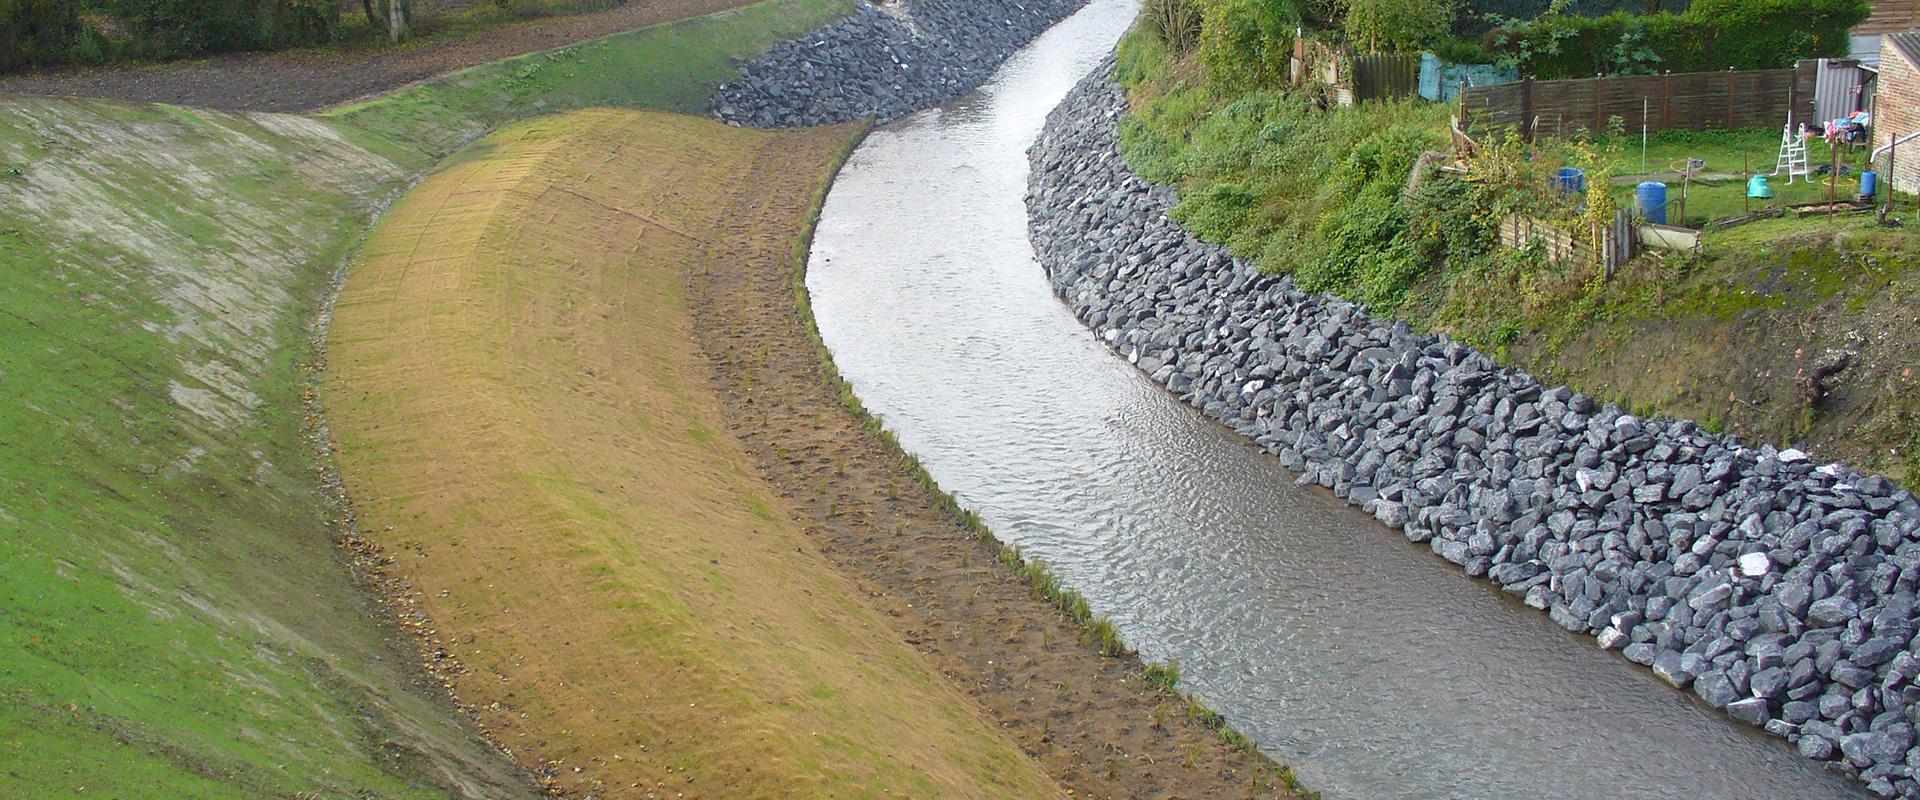 Ecological spatial development on the banks of the Lawe river, Pas-de-Calais